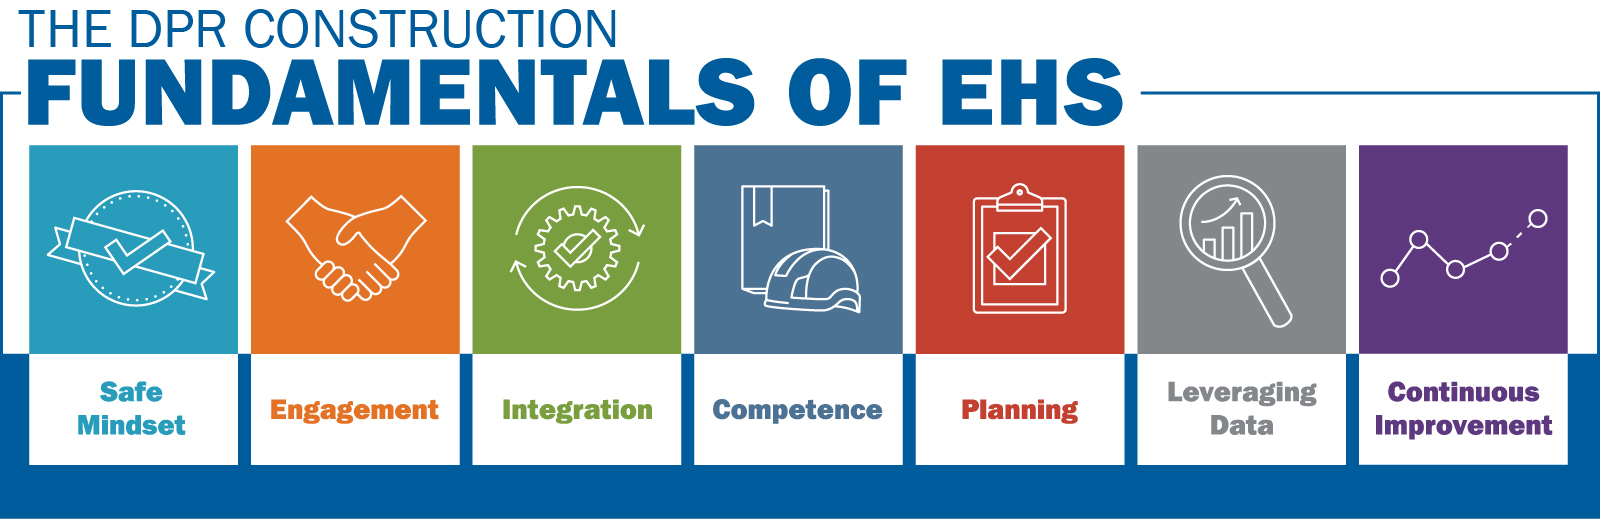 Fundamentals of EHS: Safe Mindset, Engagement, Integration, Competence, Planning, Leveraging Data, Continuous Improvement